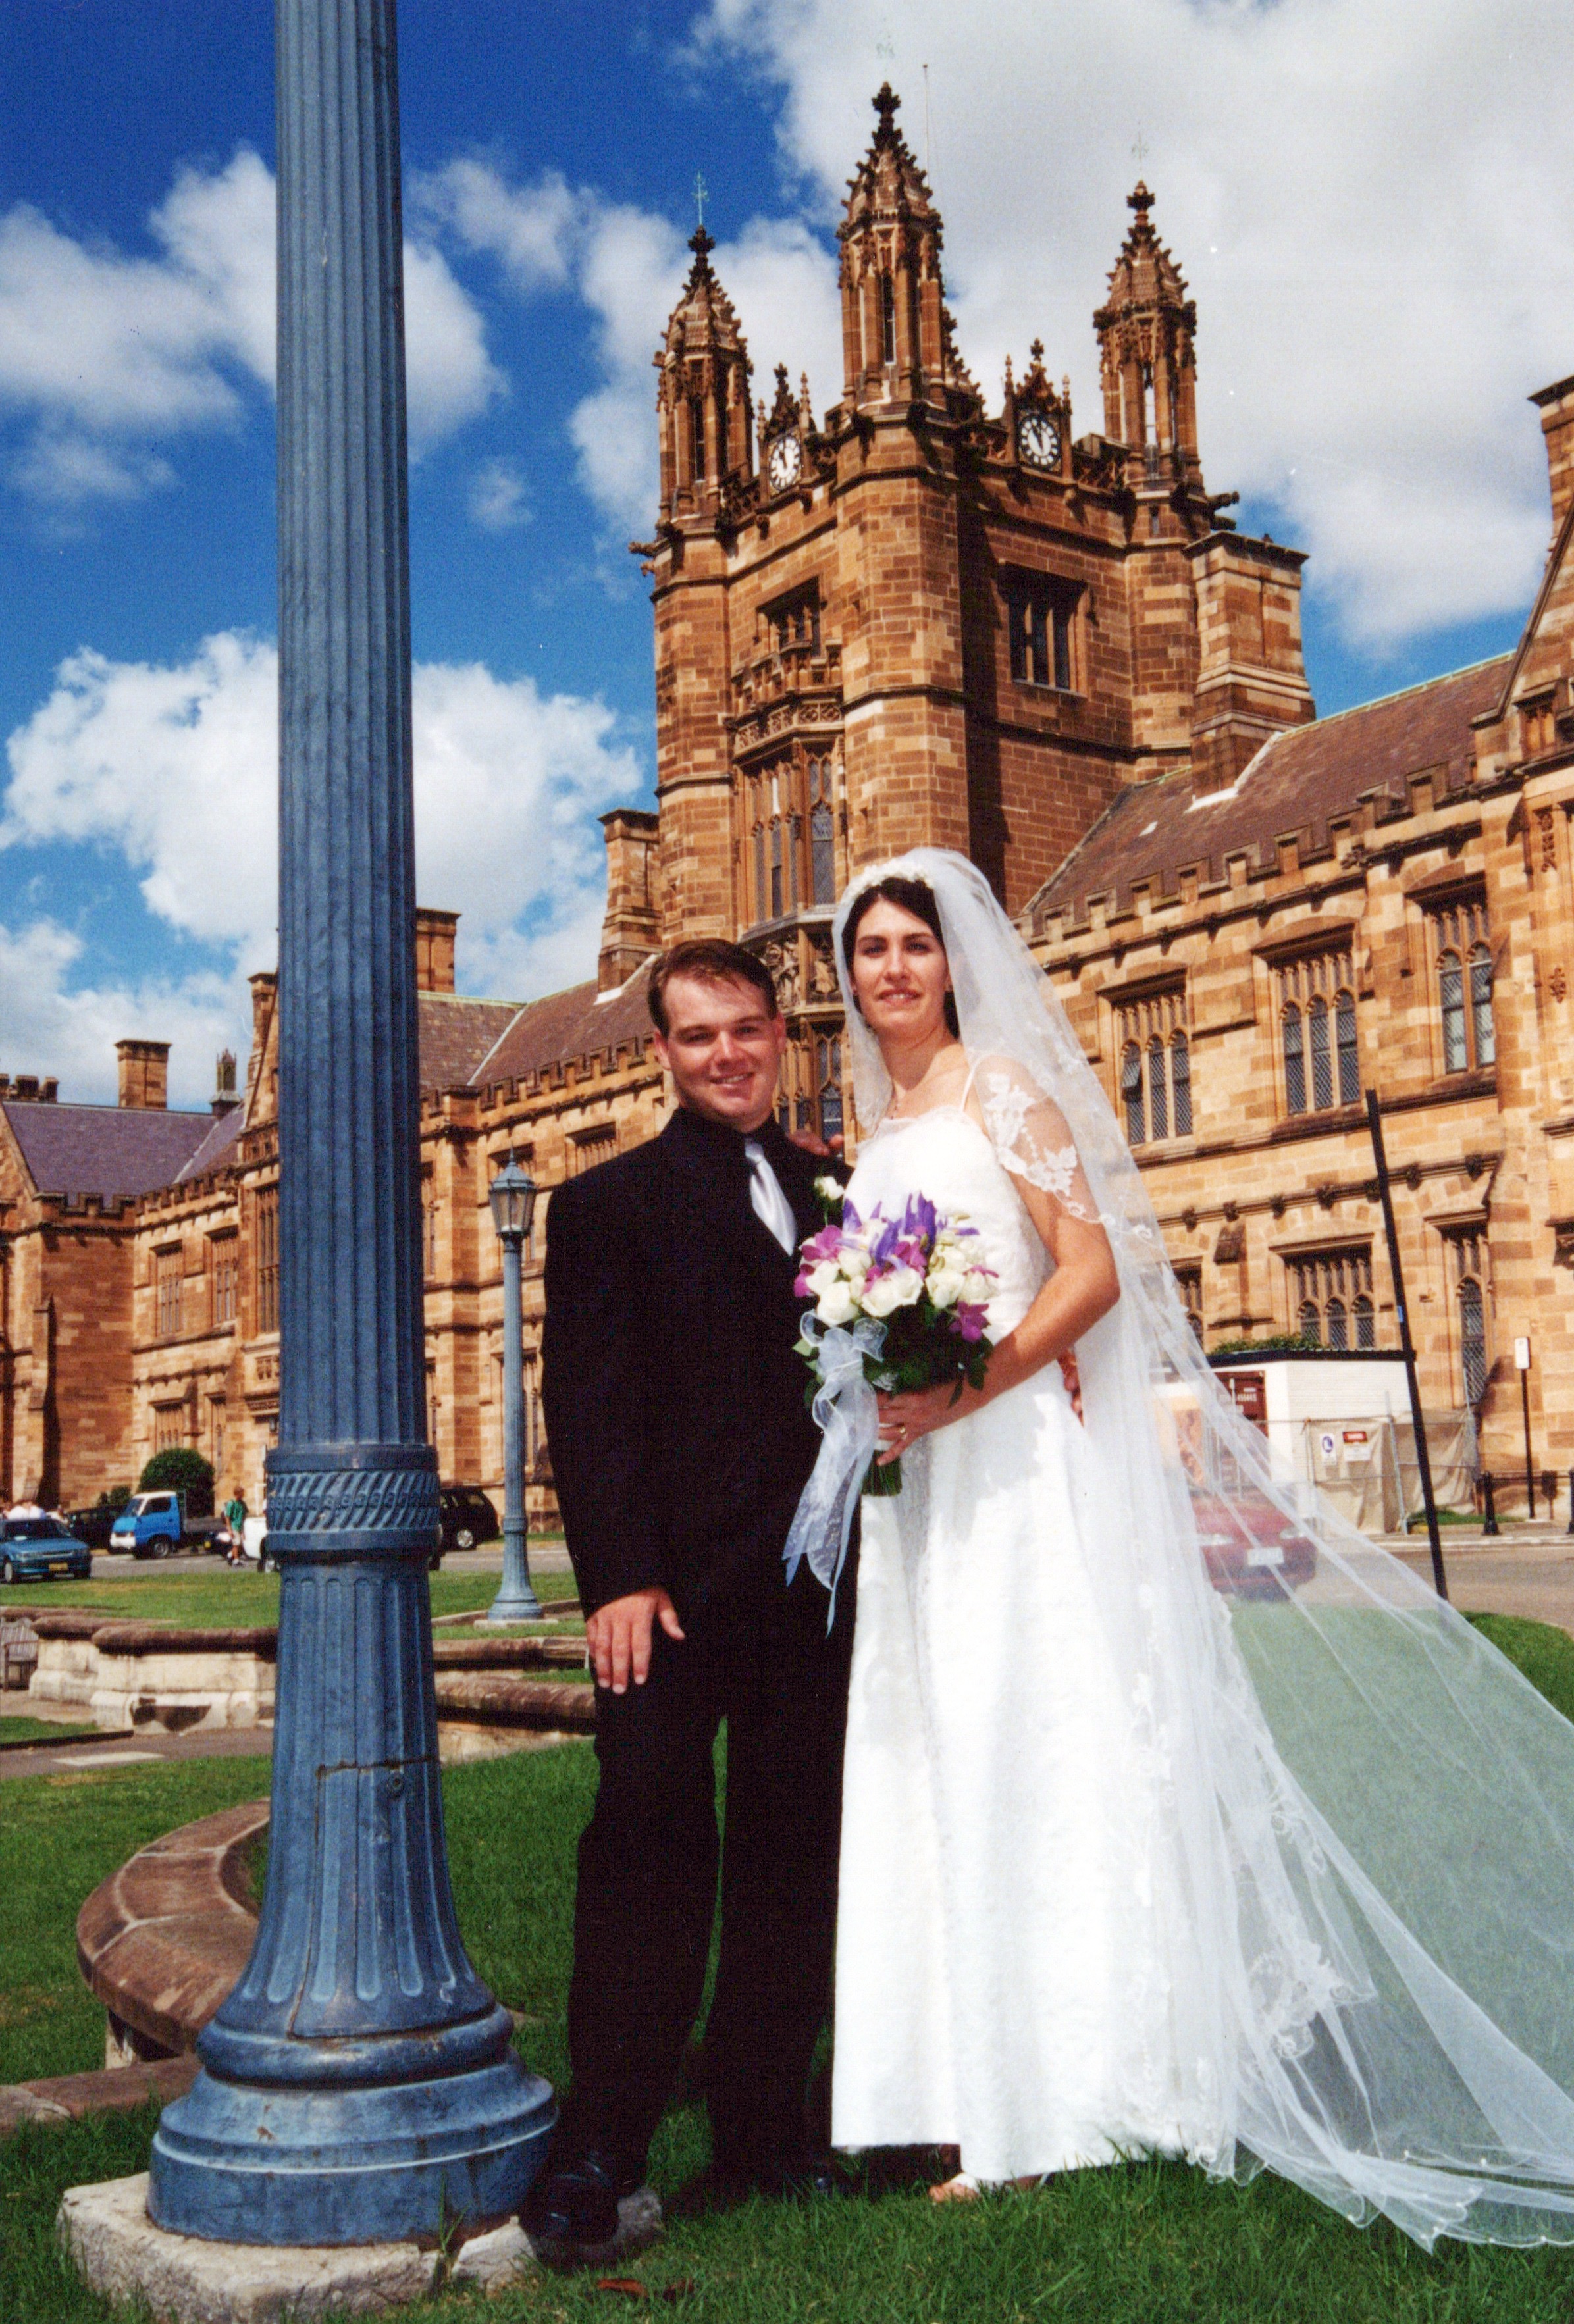 Mark and Belinda on their wedding day, 2001